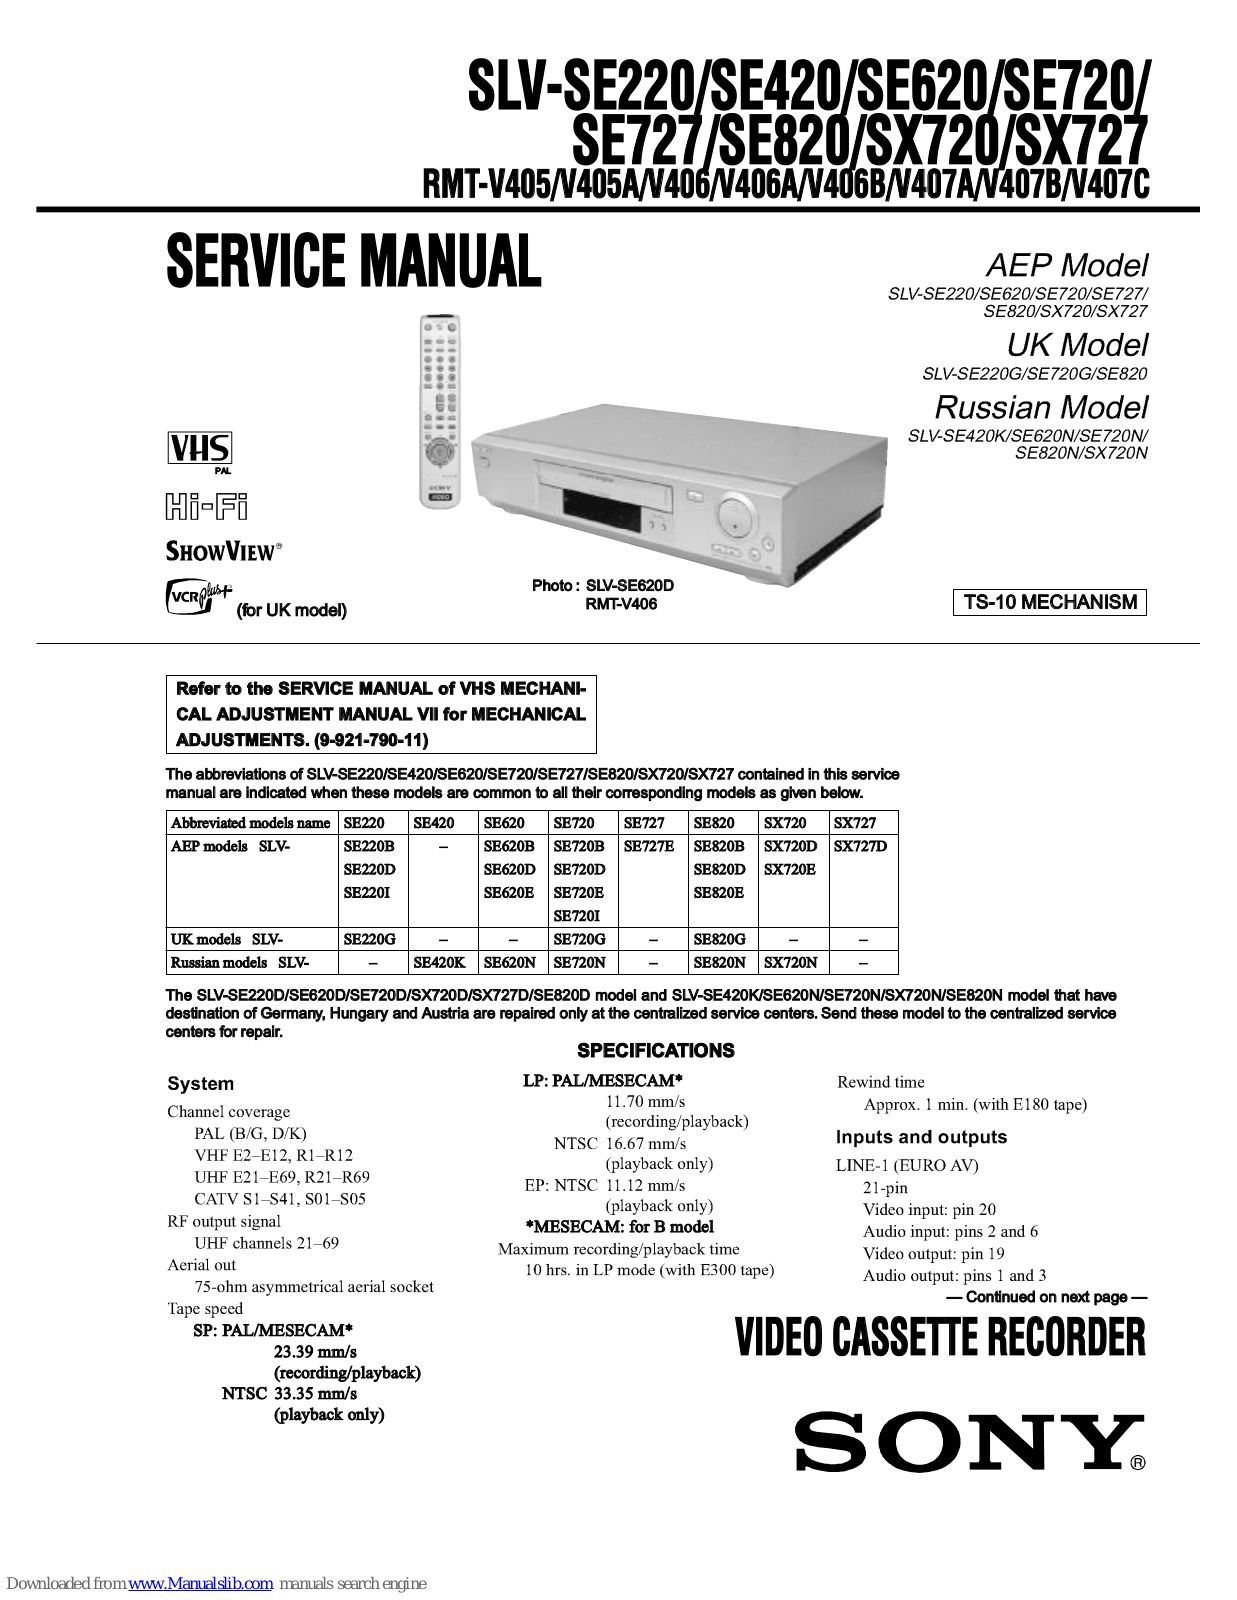 Sony SLV-SX720, SLV-SE620, SLV-SX727, RMT-V405, RMT-V405A Service Manual